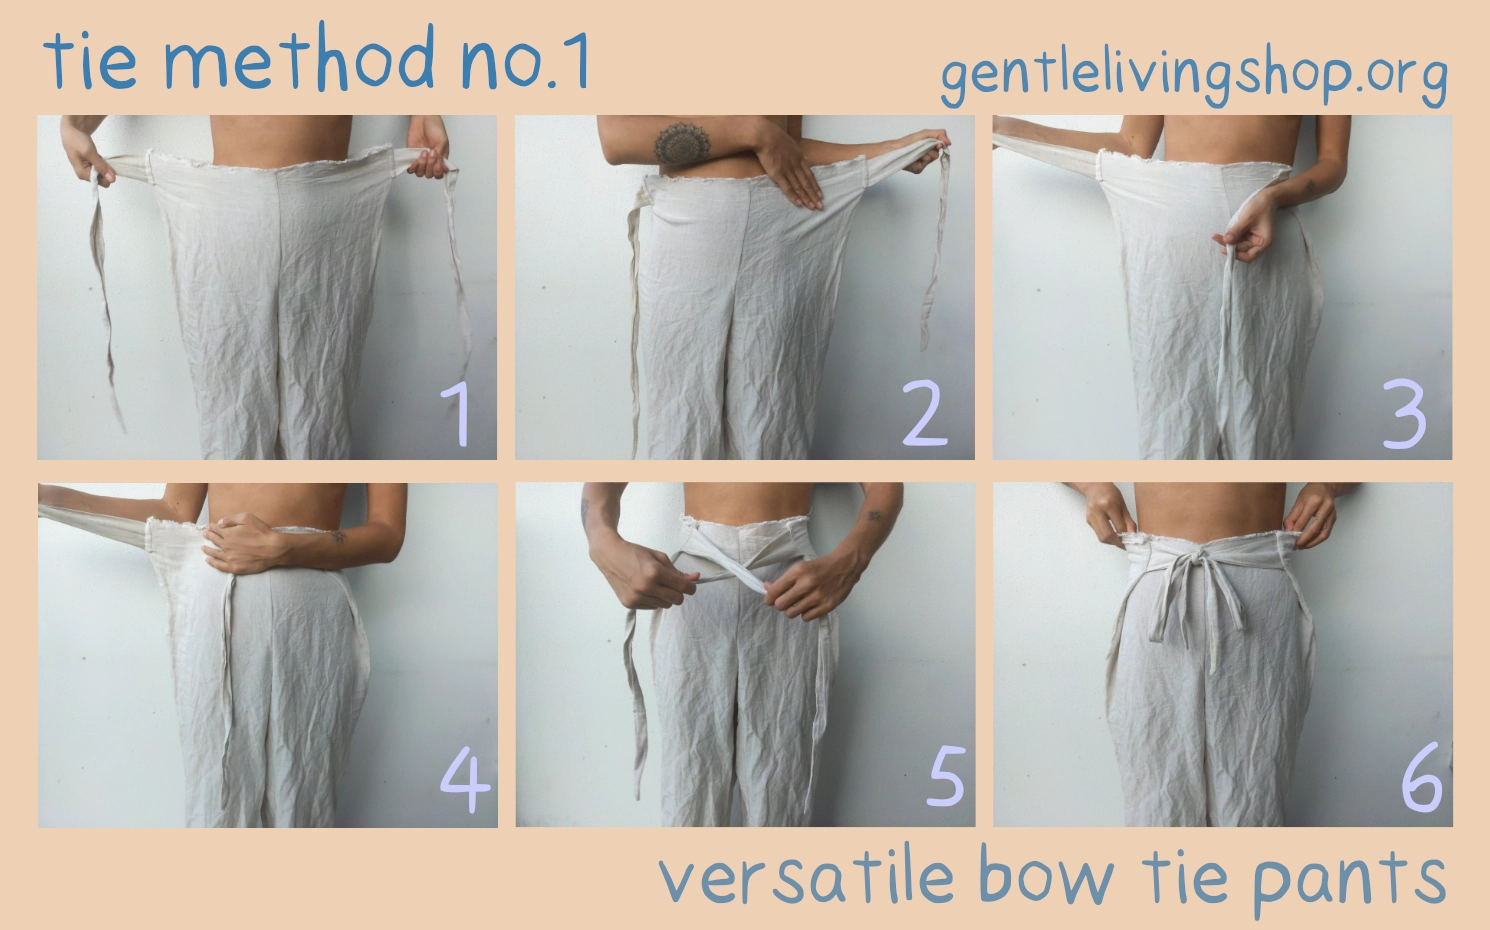 tie method no.1 for versatile bow tie pants